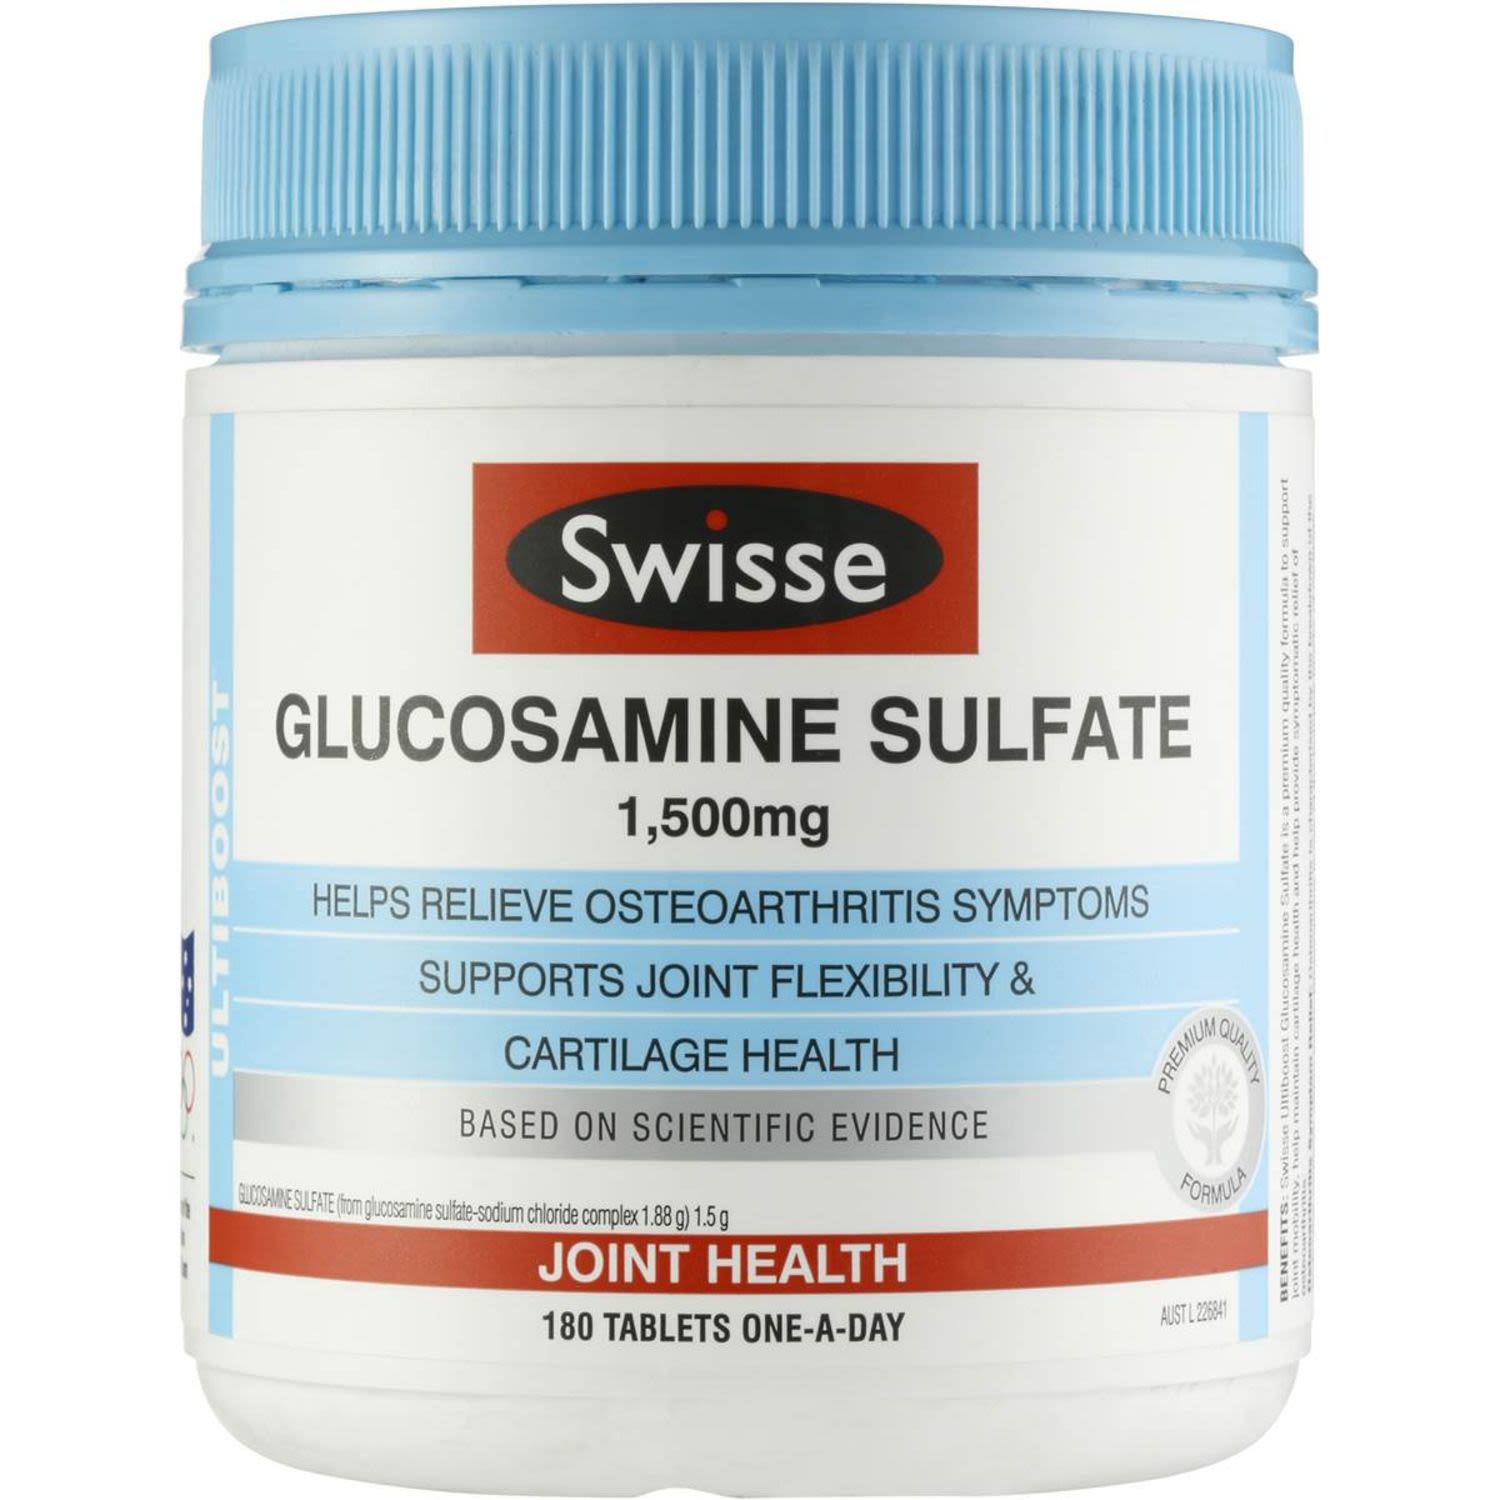 Swisse Glucosamine Sulfate 1500mg, 180 Each